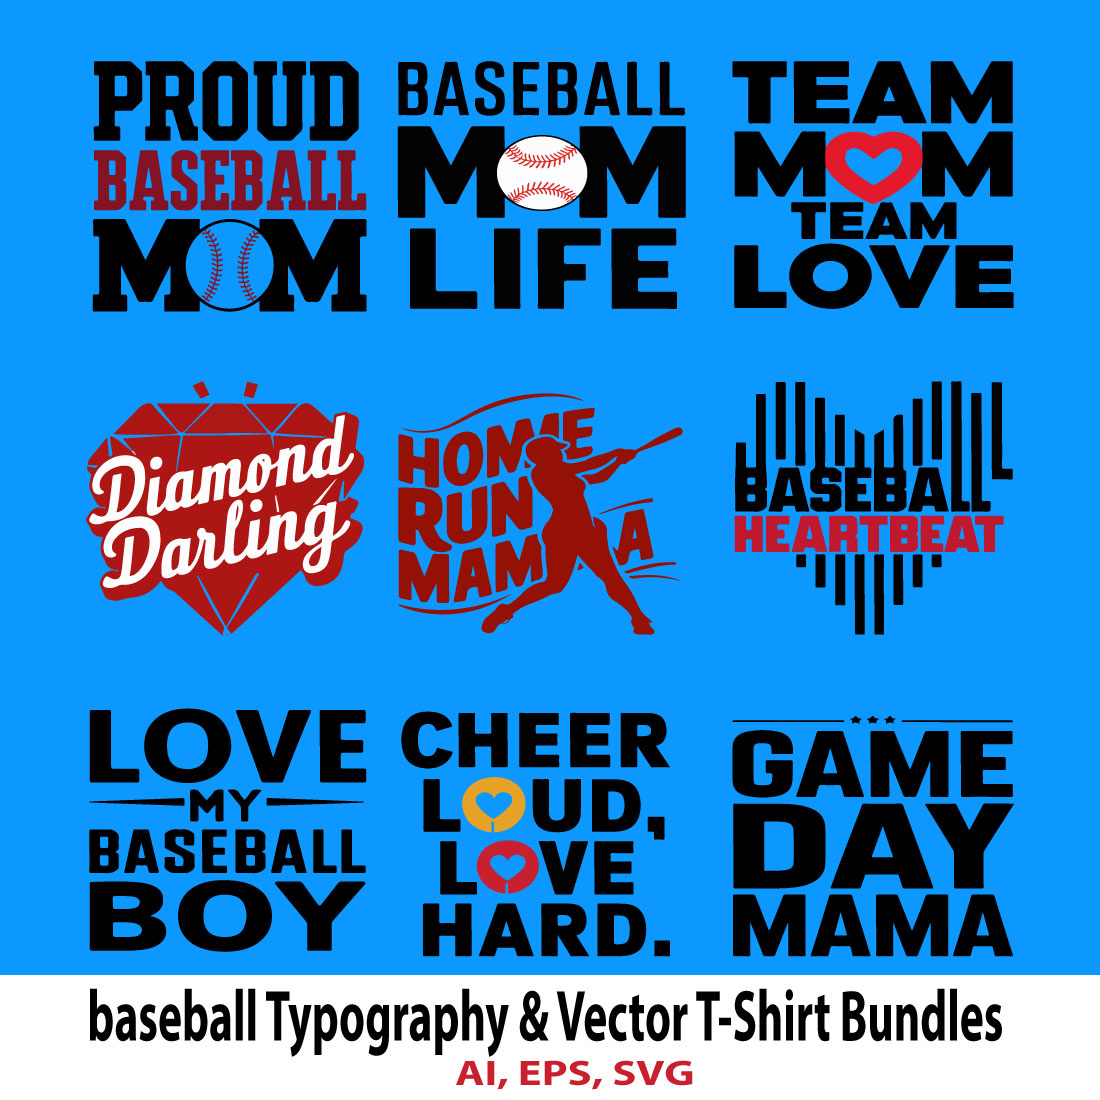 baseball Typography & Vector T-Shirt Bundles cover image.